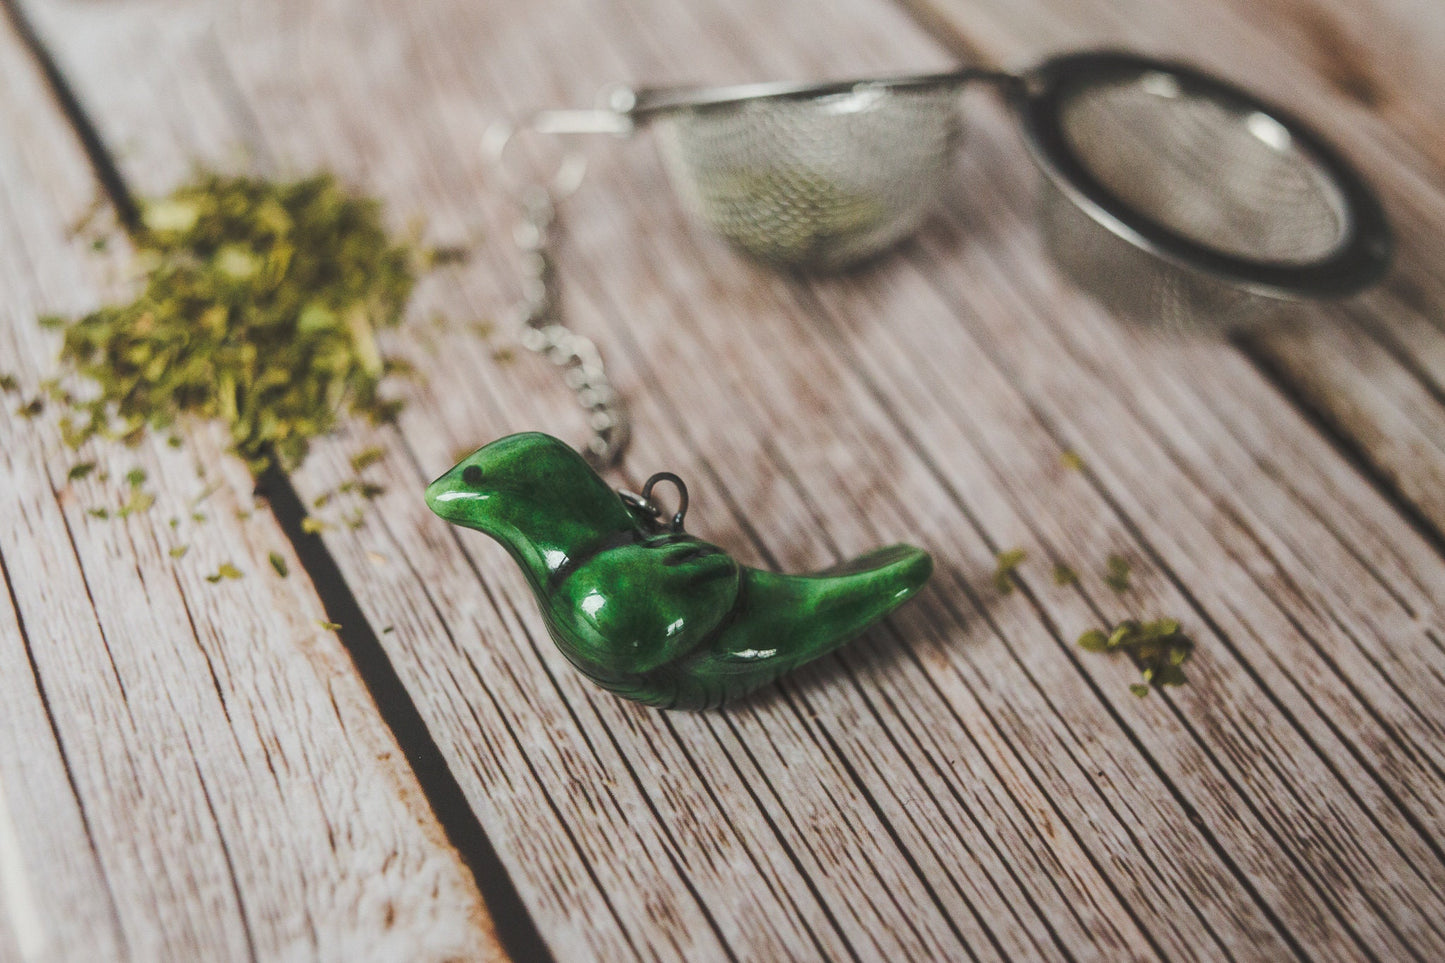 Loose leaf tea strainer with green ceramic bird - Tea infuser with bird charm - Herbal tea steeper - Christmas gift